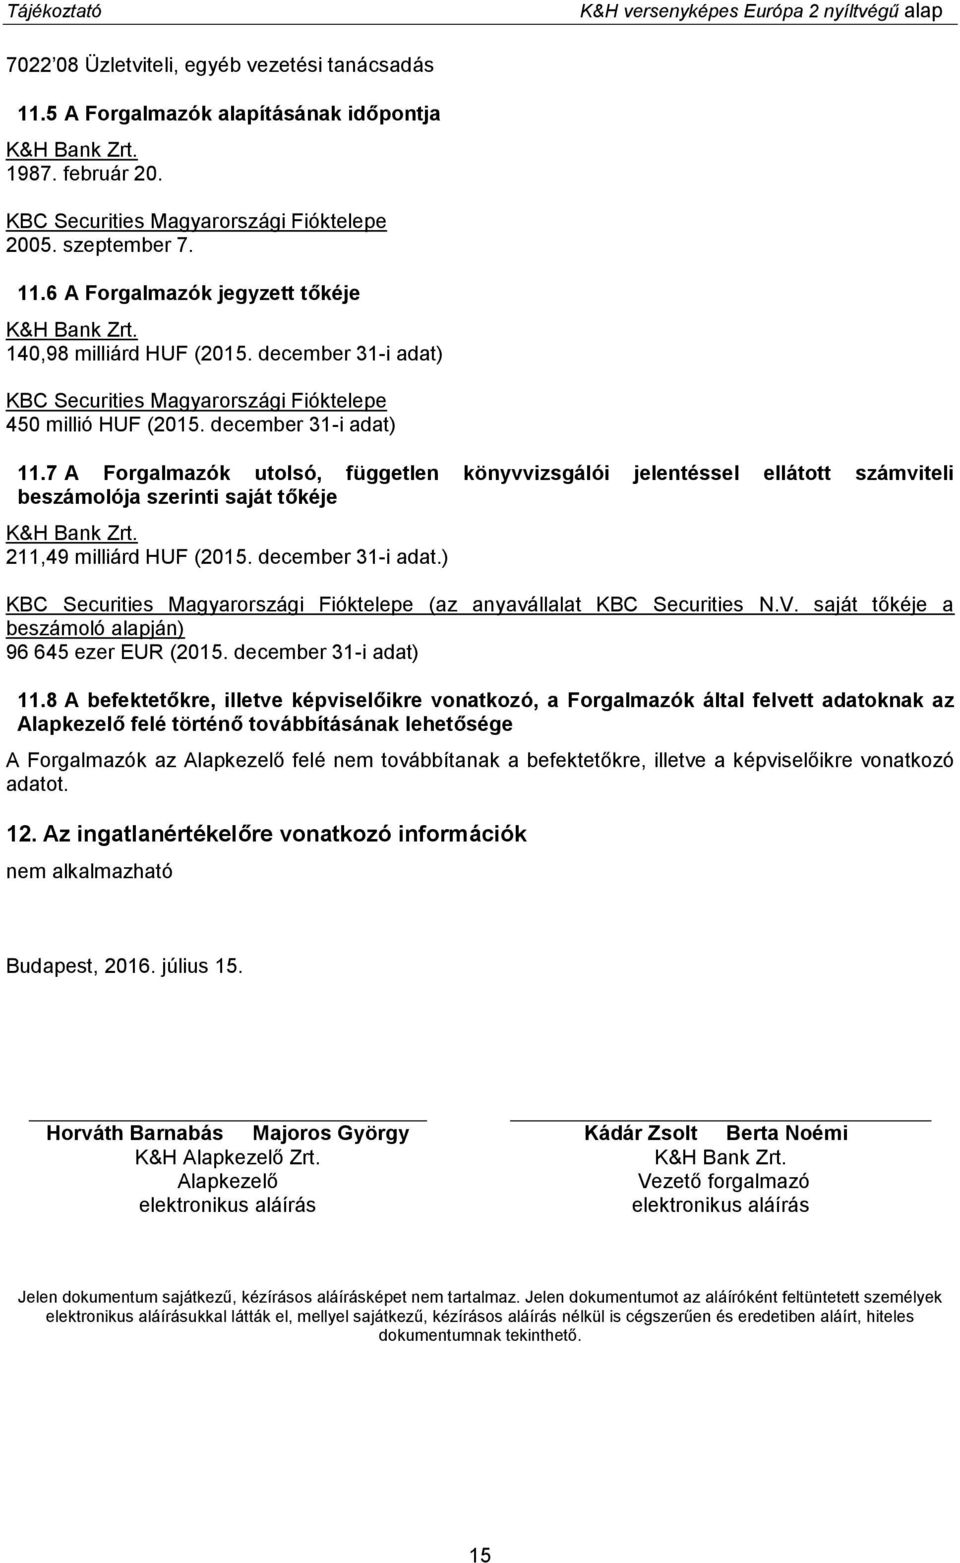 december 31-i adat) KBC Securities Magyarországi Fióktelepe 450 millió HUF (2015. december 31-i adat) 11.